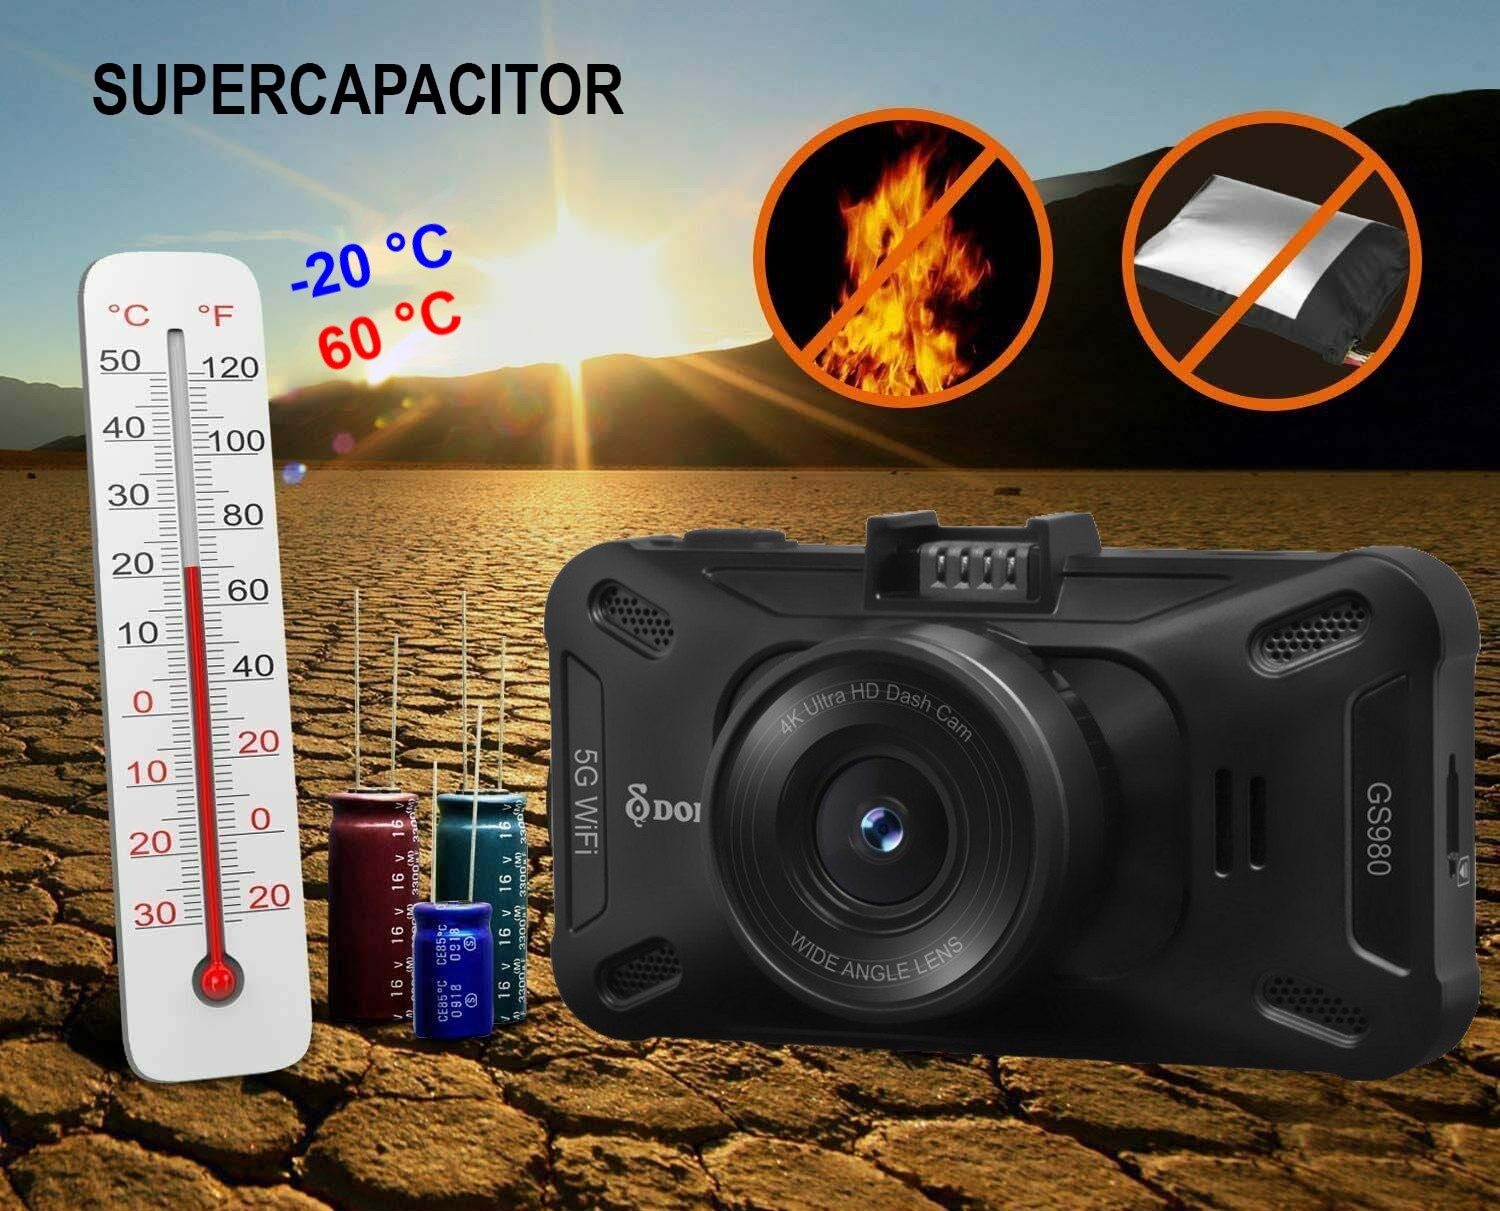 bateri supercapacitor untuk kamera kereta